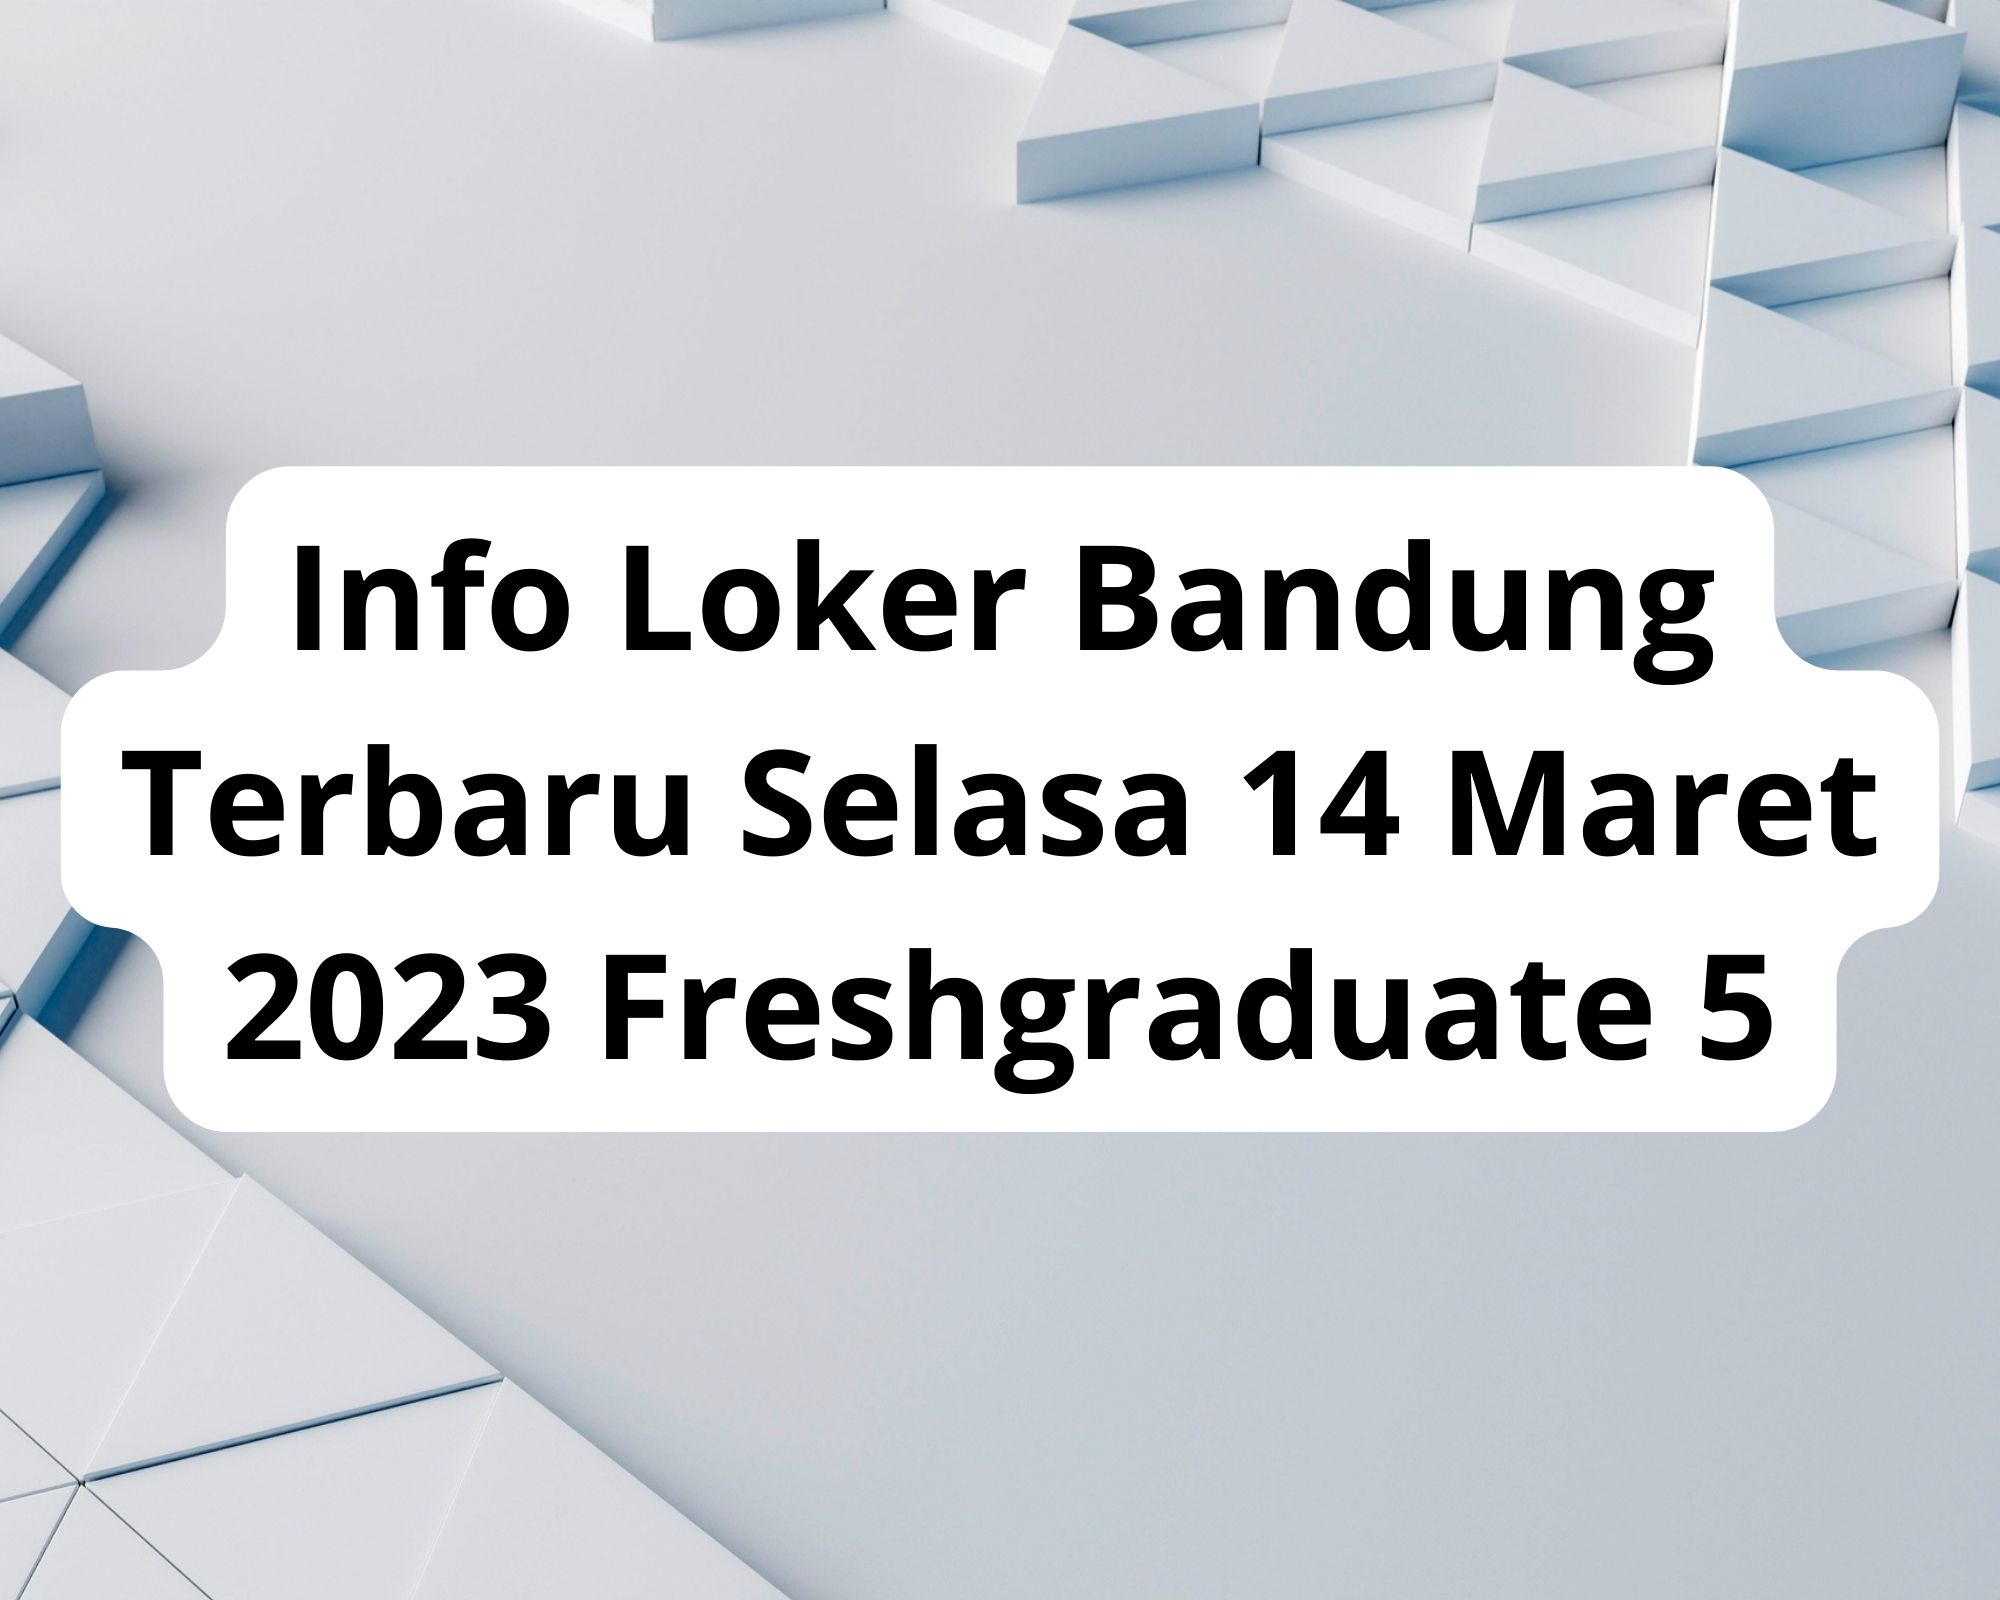 Info Loker Bandung Terbaru Selasa 14 Maret 2023 Freshgraduate 5